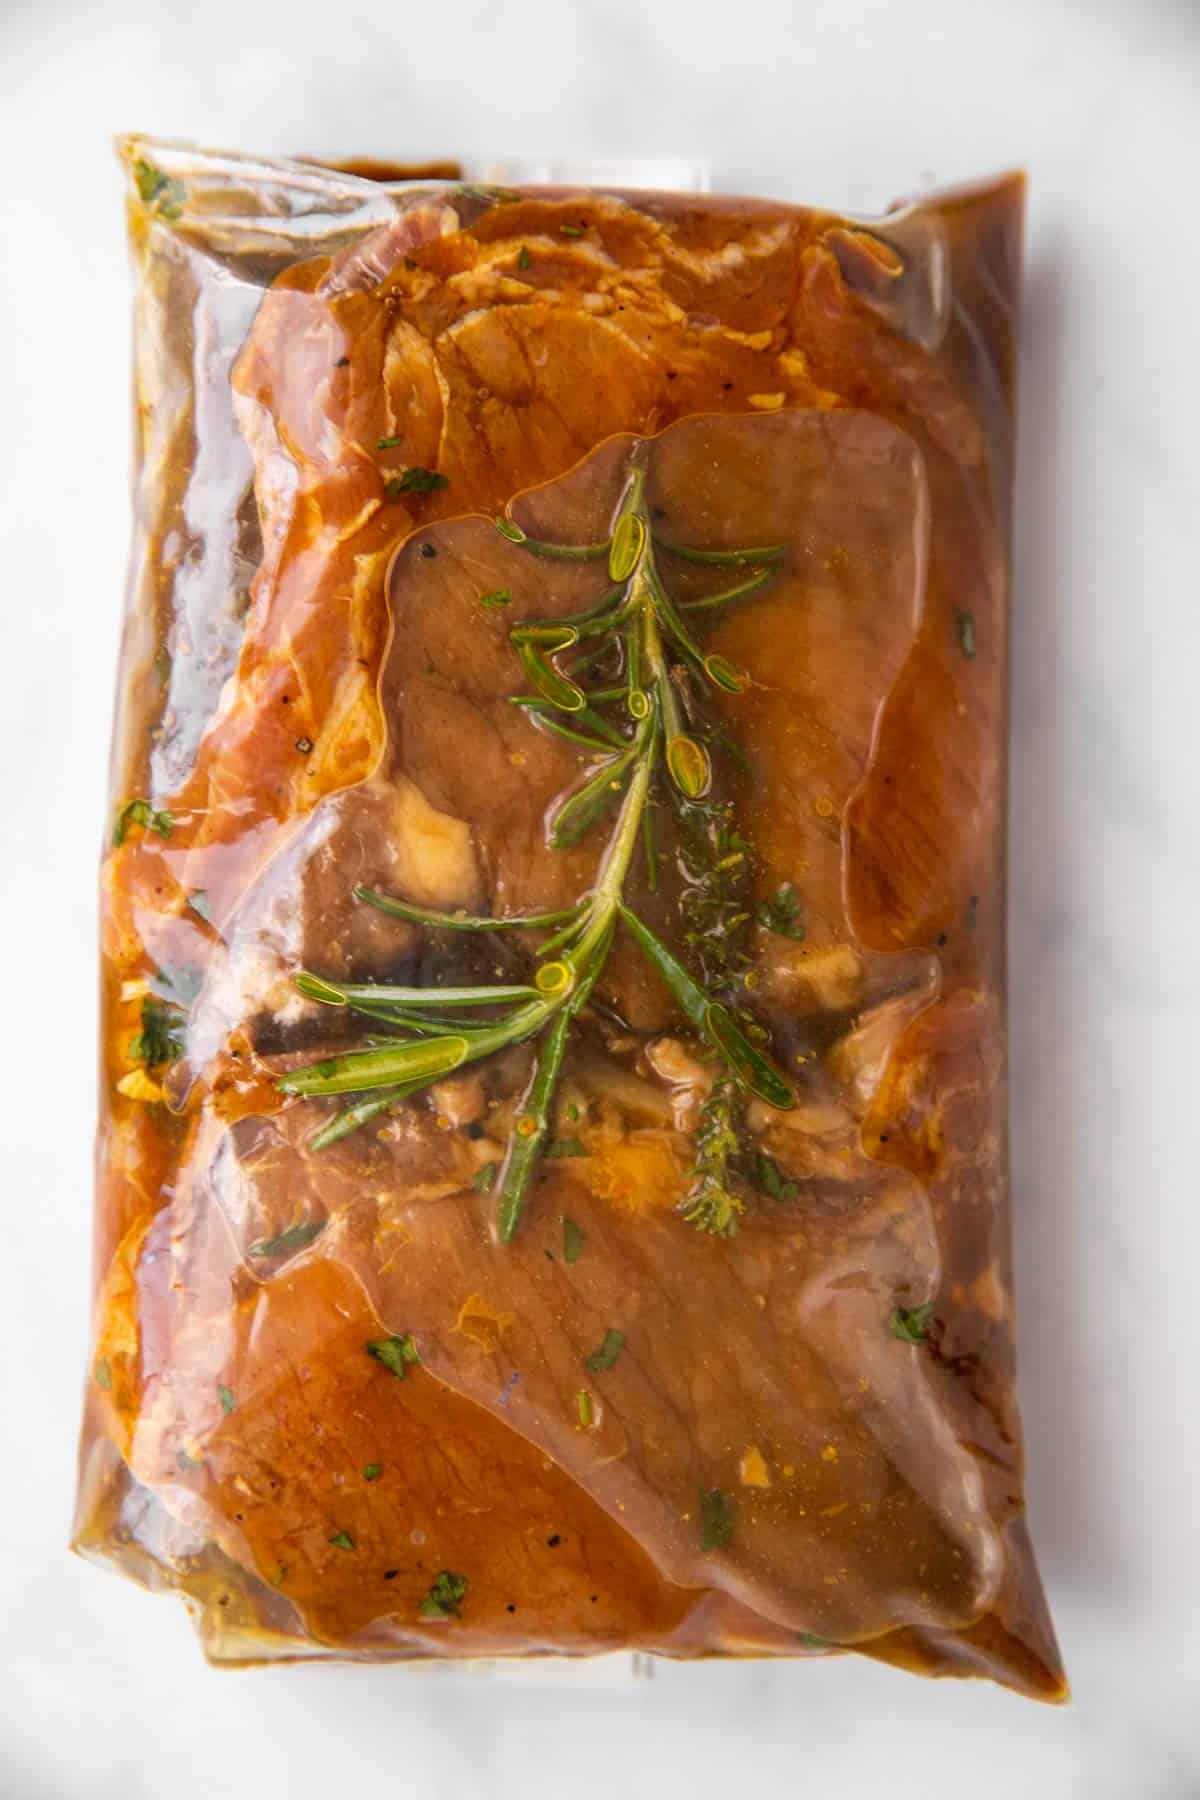 ziploc bag with marinated pork chops